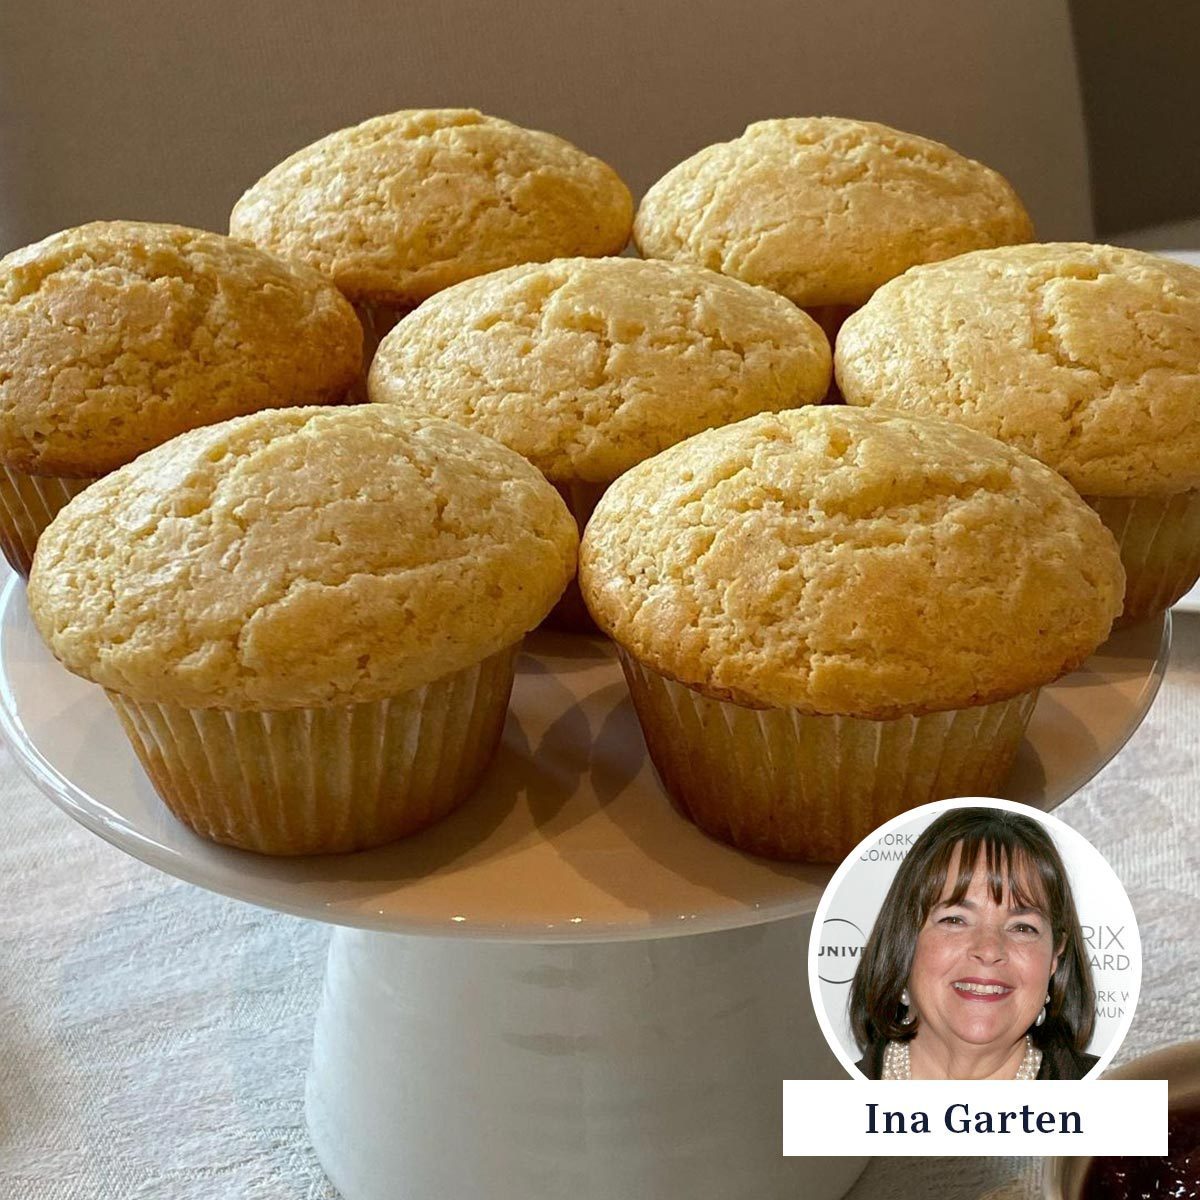 Ina Garten Corn Muffins Via Inagarten Instagram Comma Getty Images